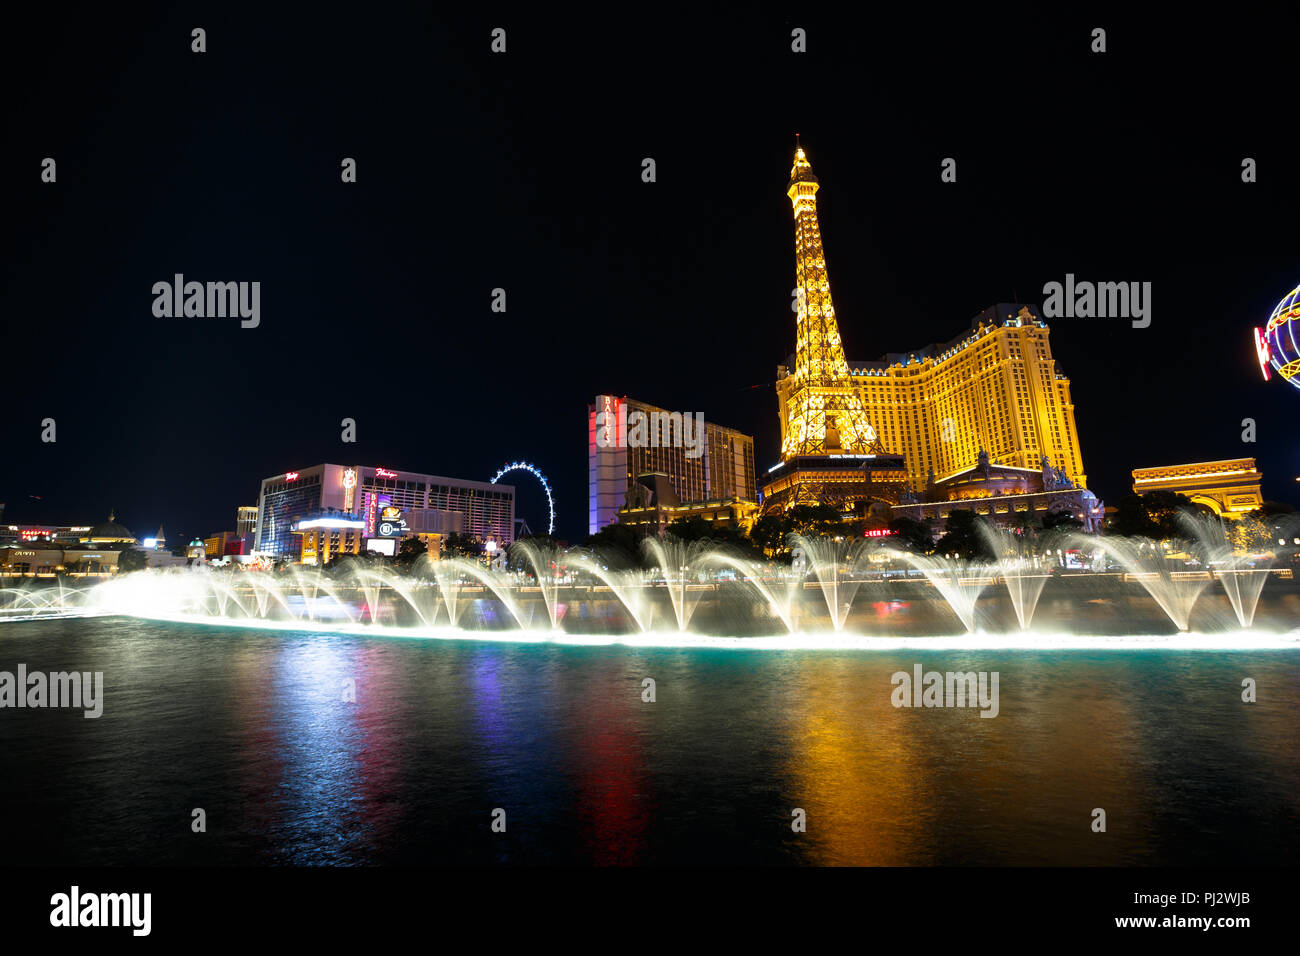 Bellagio fountain show at night on the Las Vegas Strip - Las Vegas, Nevada Stock Photo